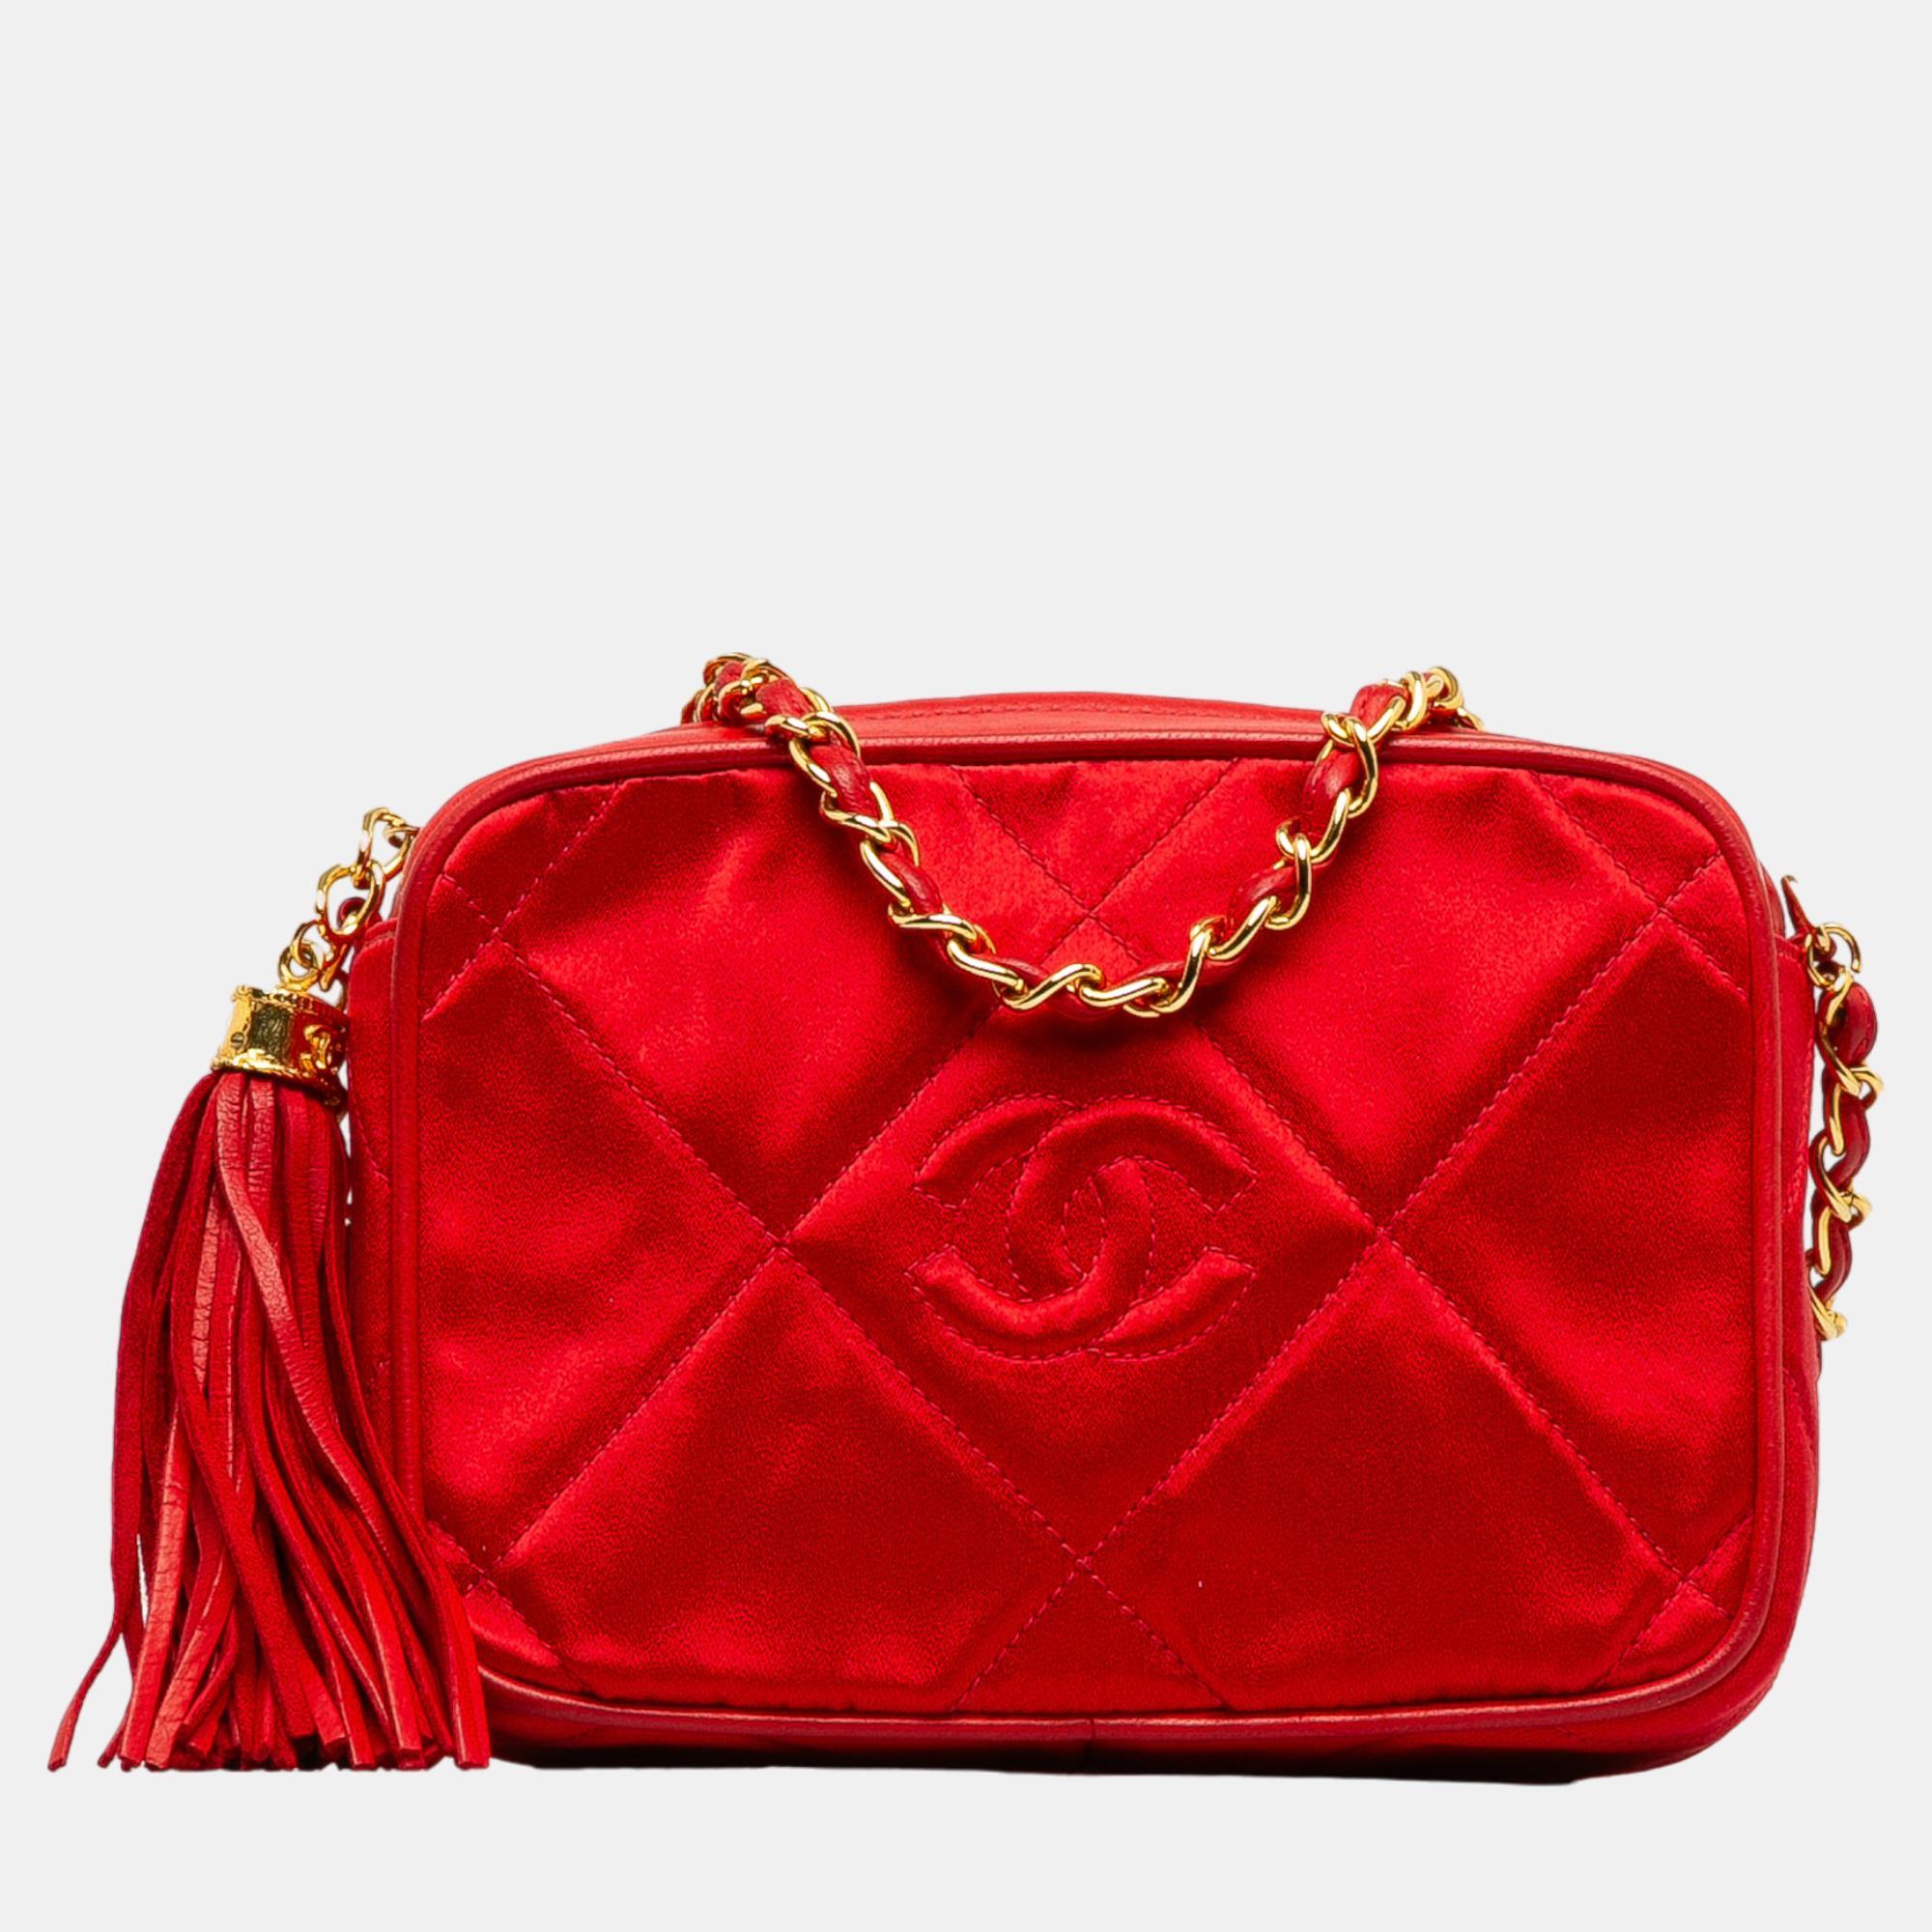 Chanel red cc satin chain crossbody bag